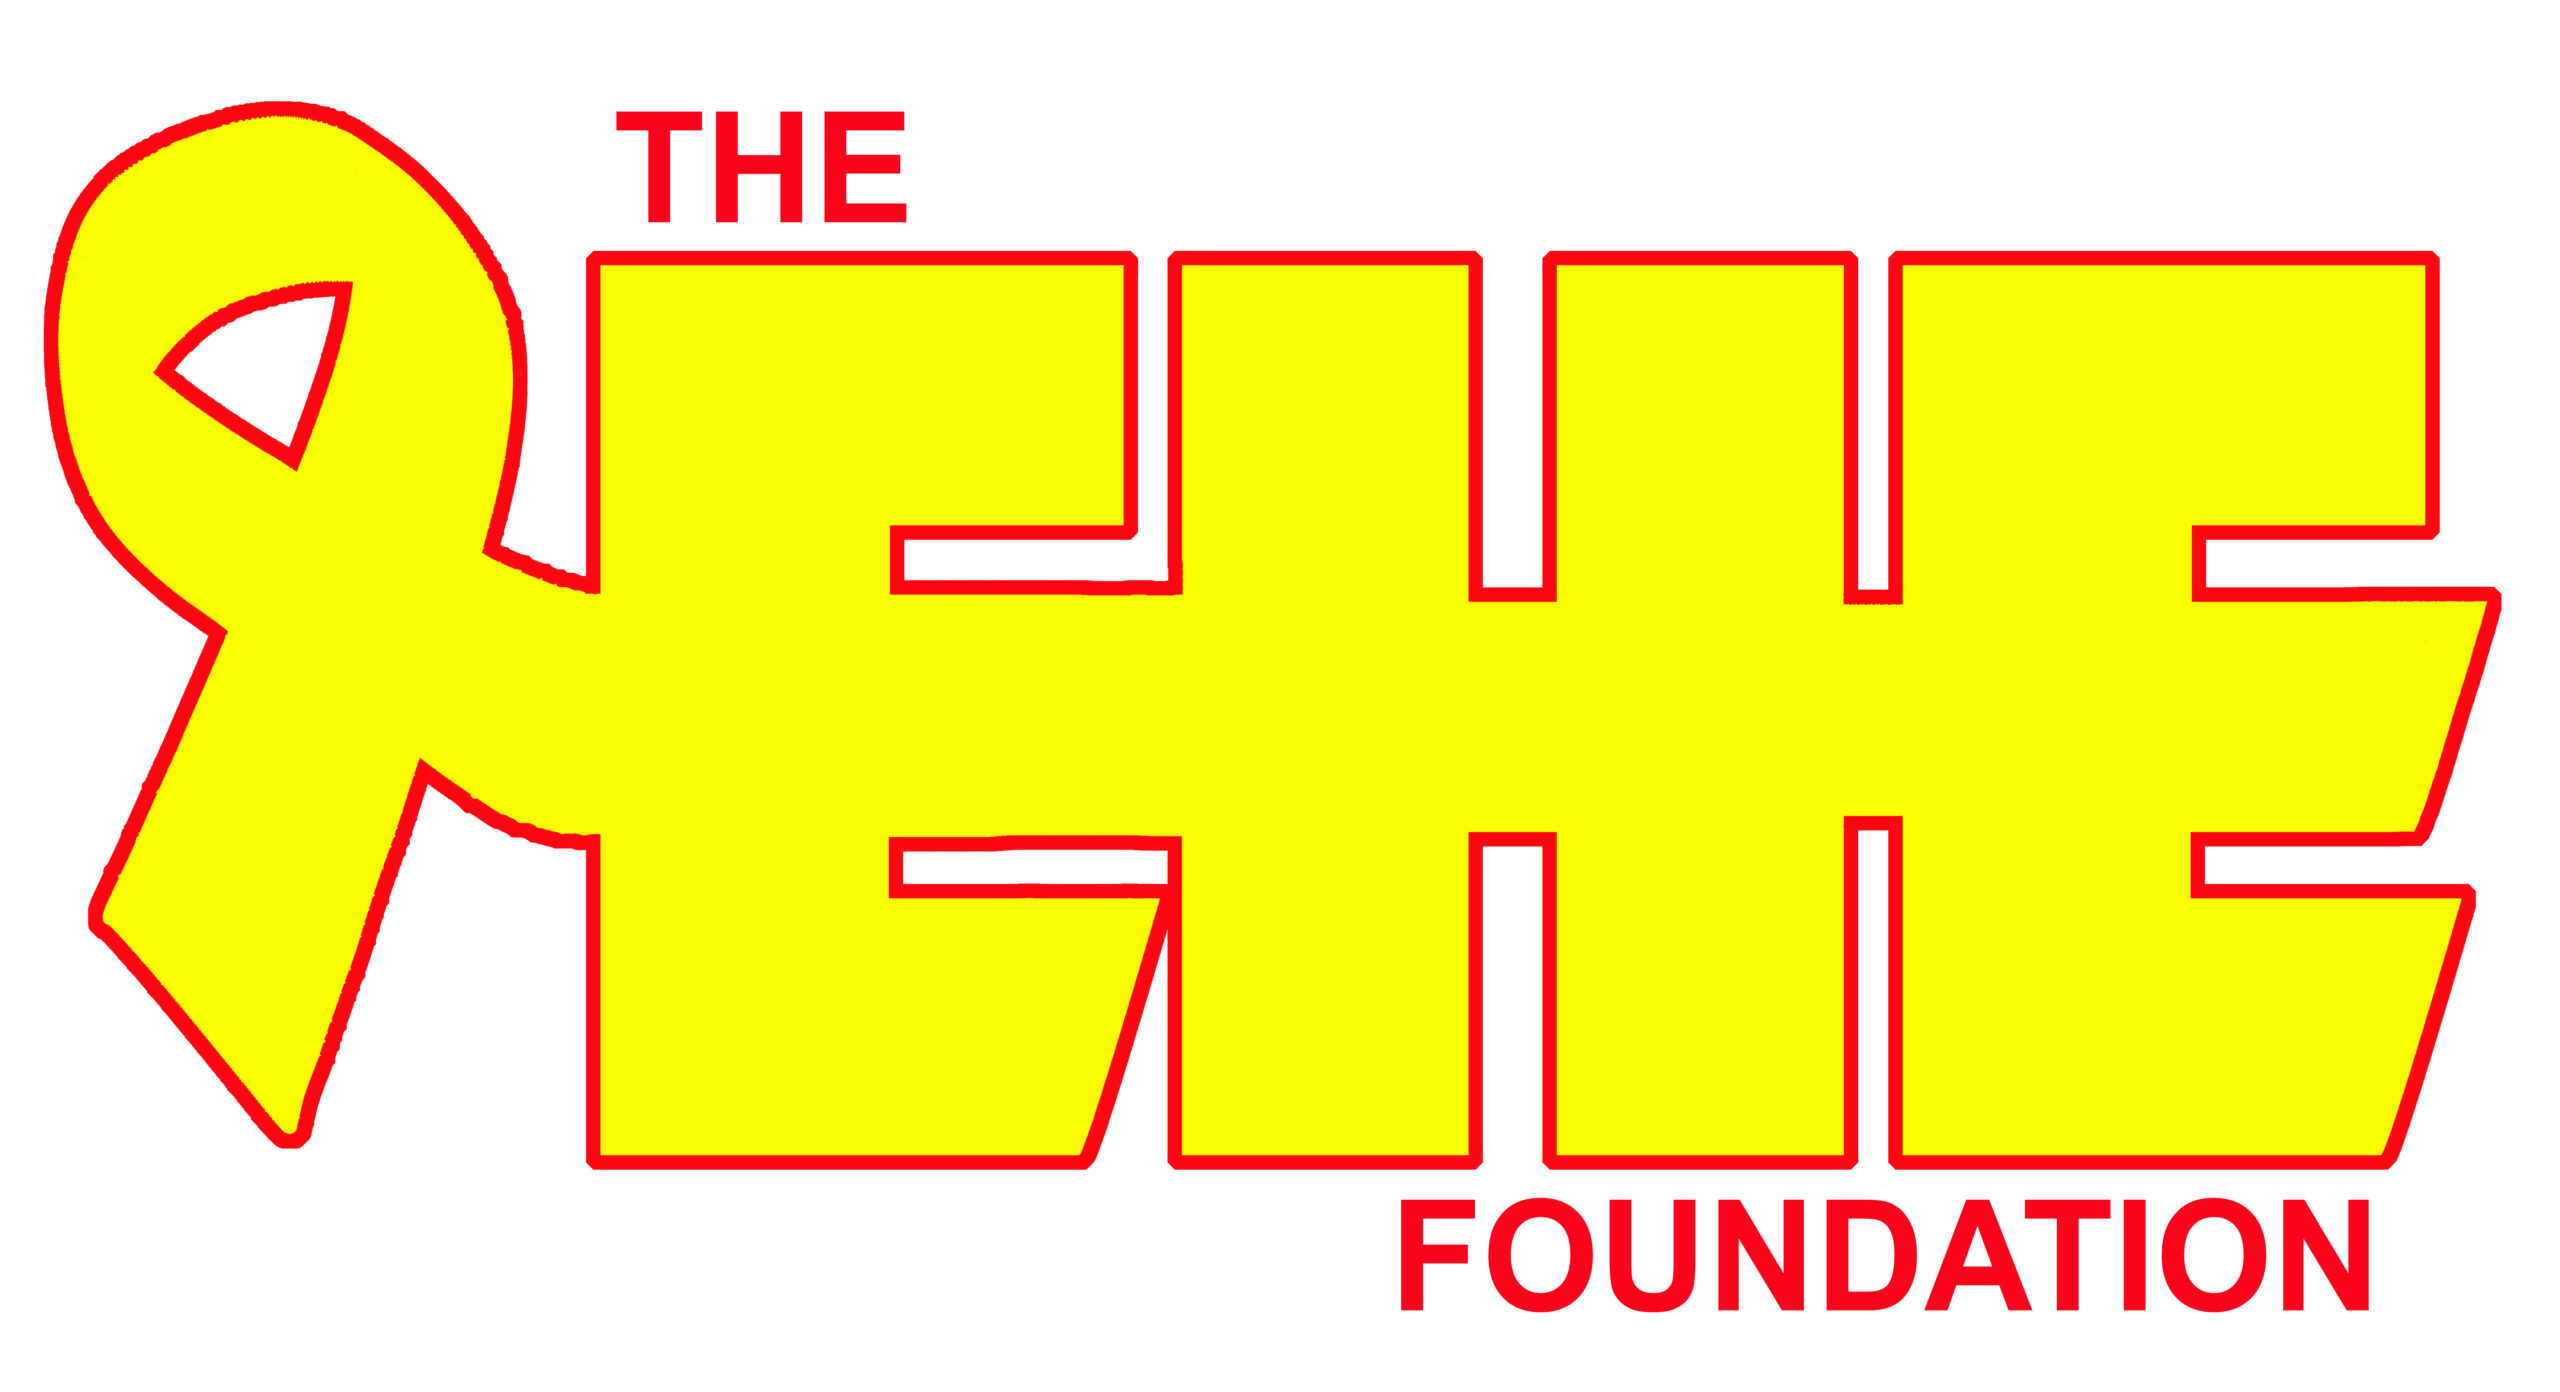 Ehe foundation ribbon logo in red